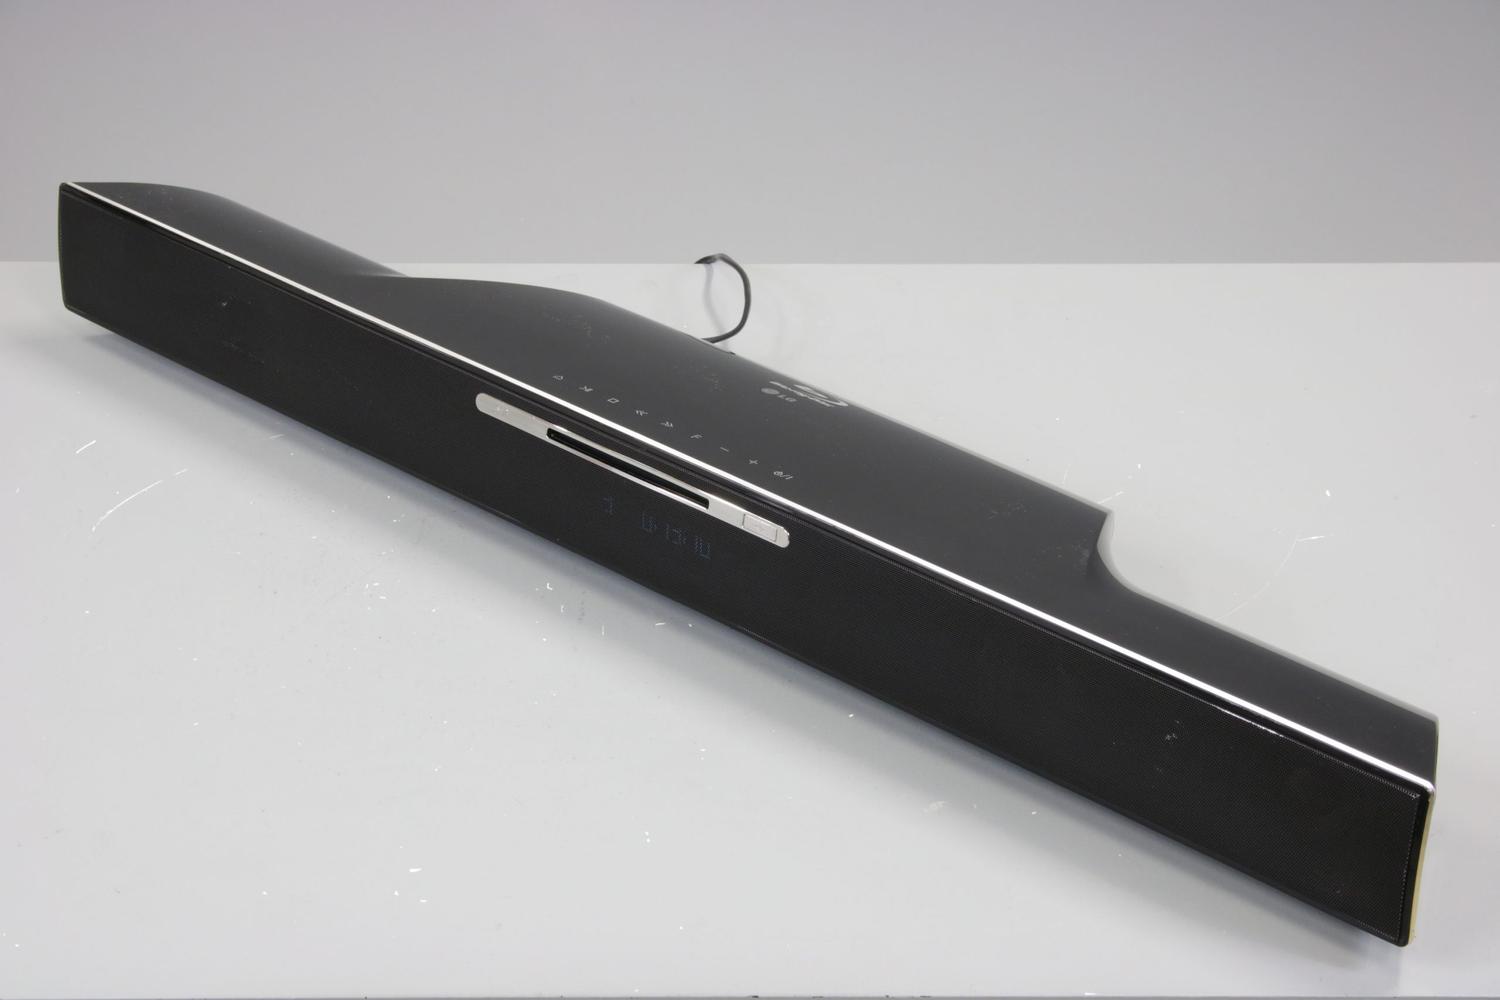 LG Super slim Blu-ray sound bar modell HLB54S